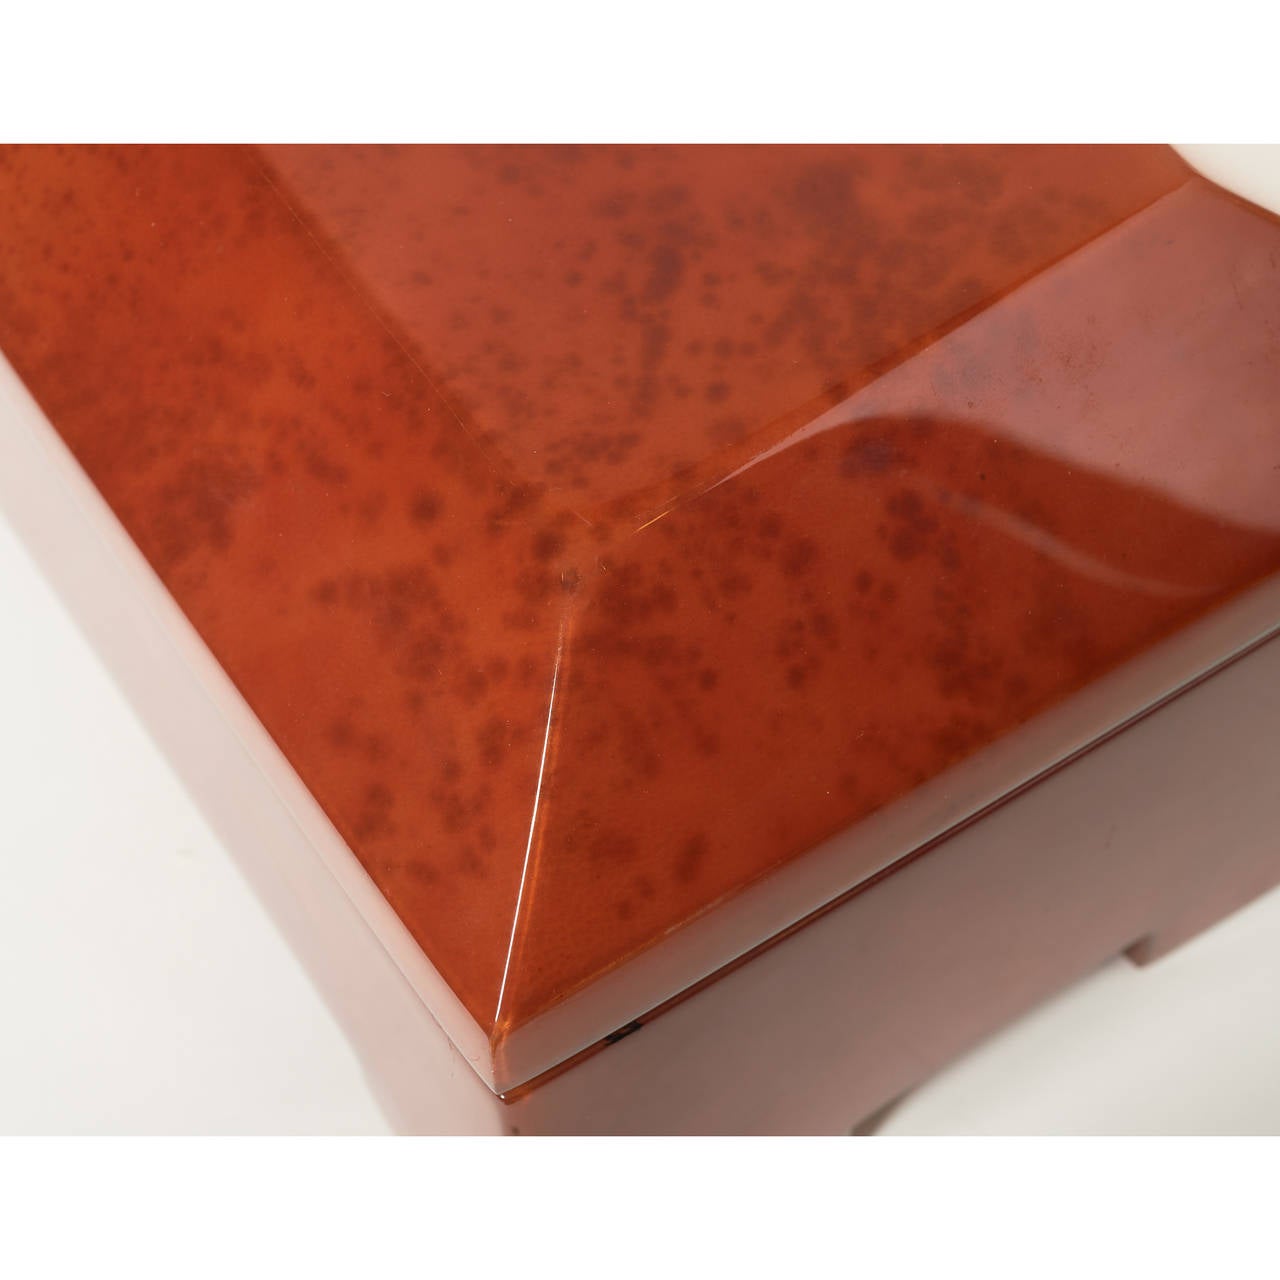 Goatskin Blood Red Parchment Wrapped Casket Jewelry Box by Maitland-Smith